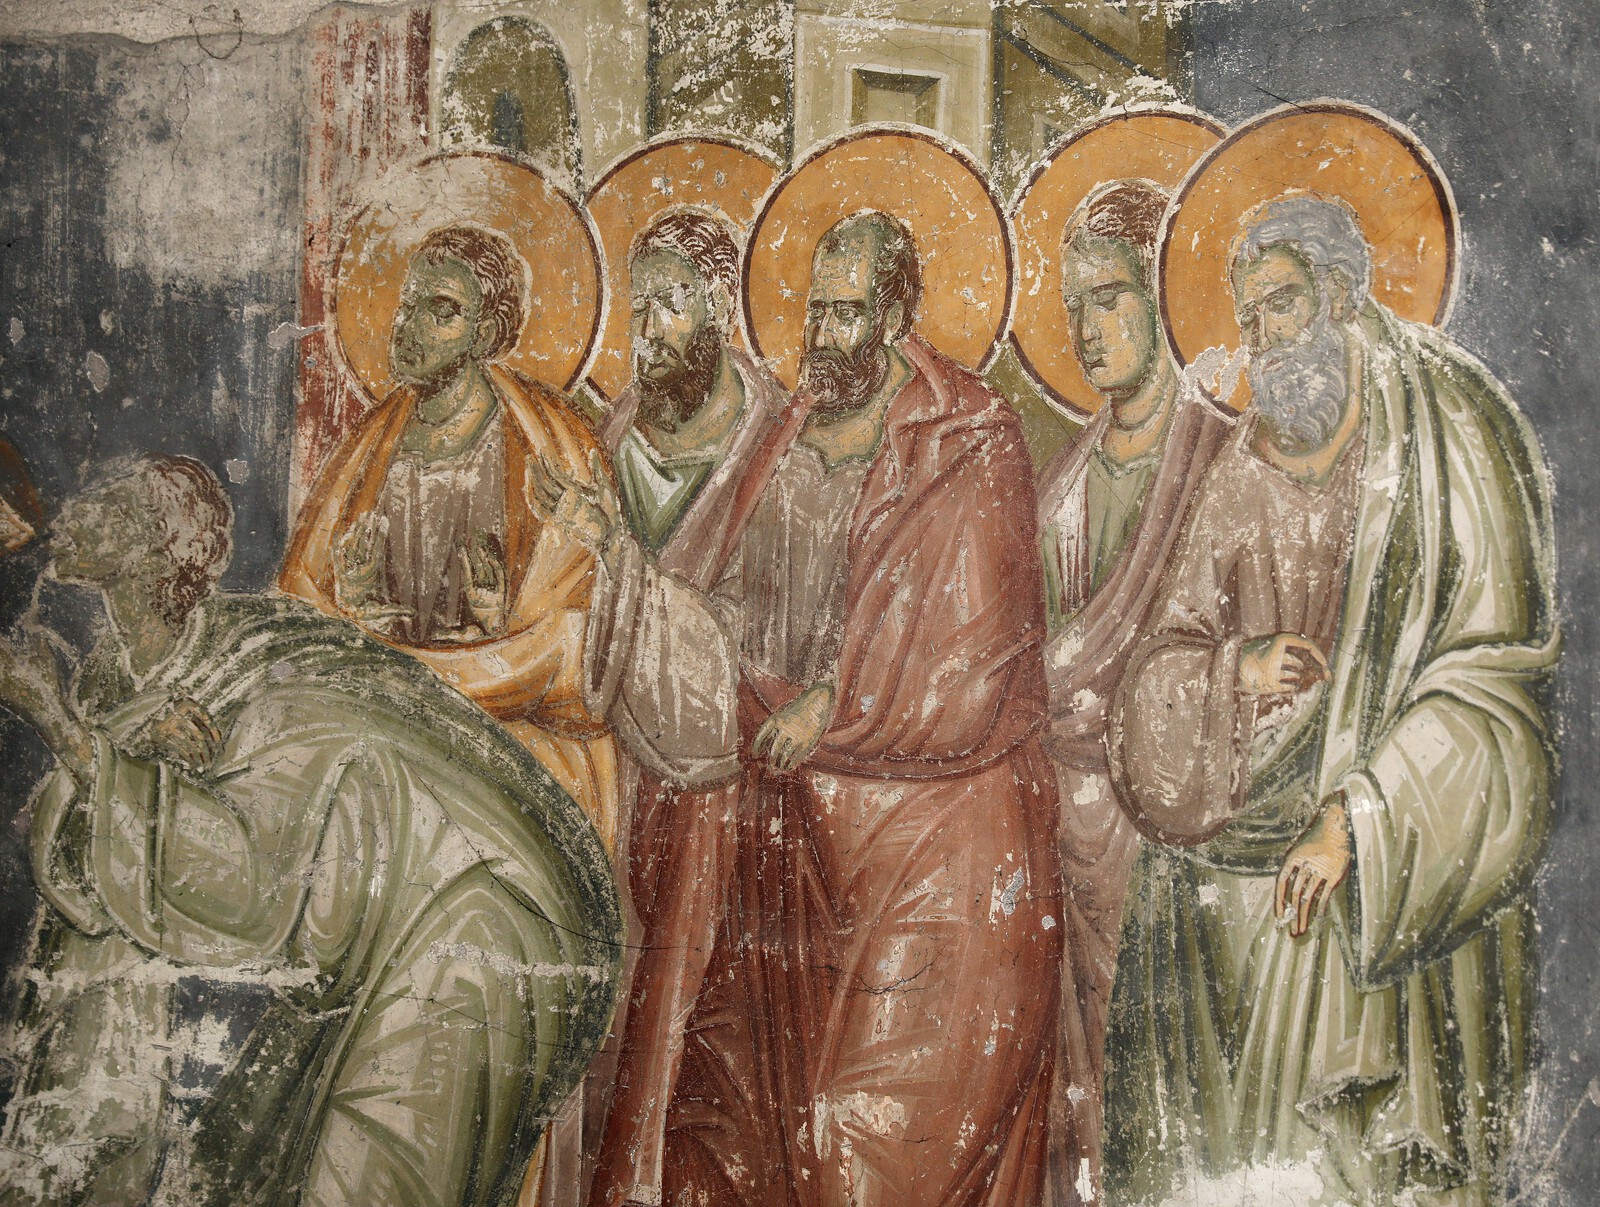 Communion of the Apostles, detail